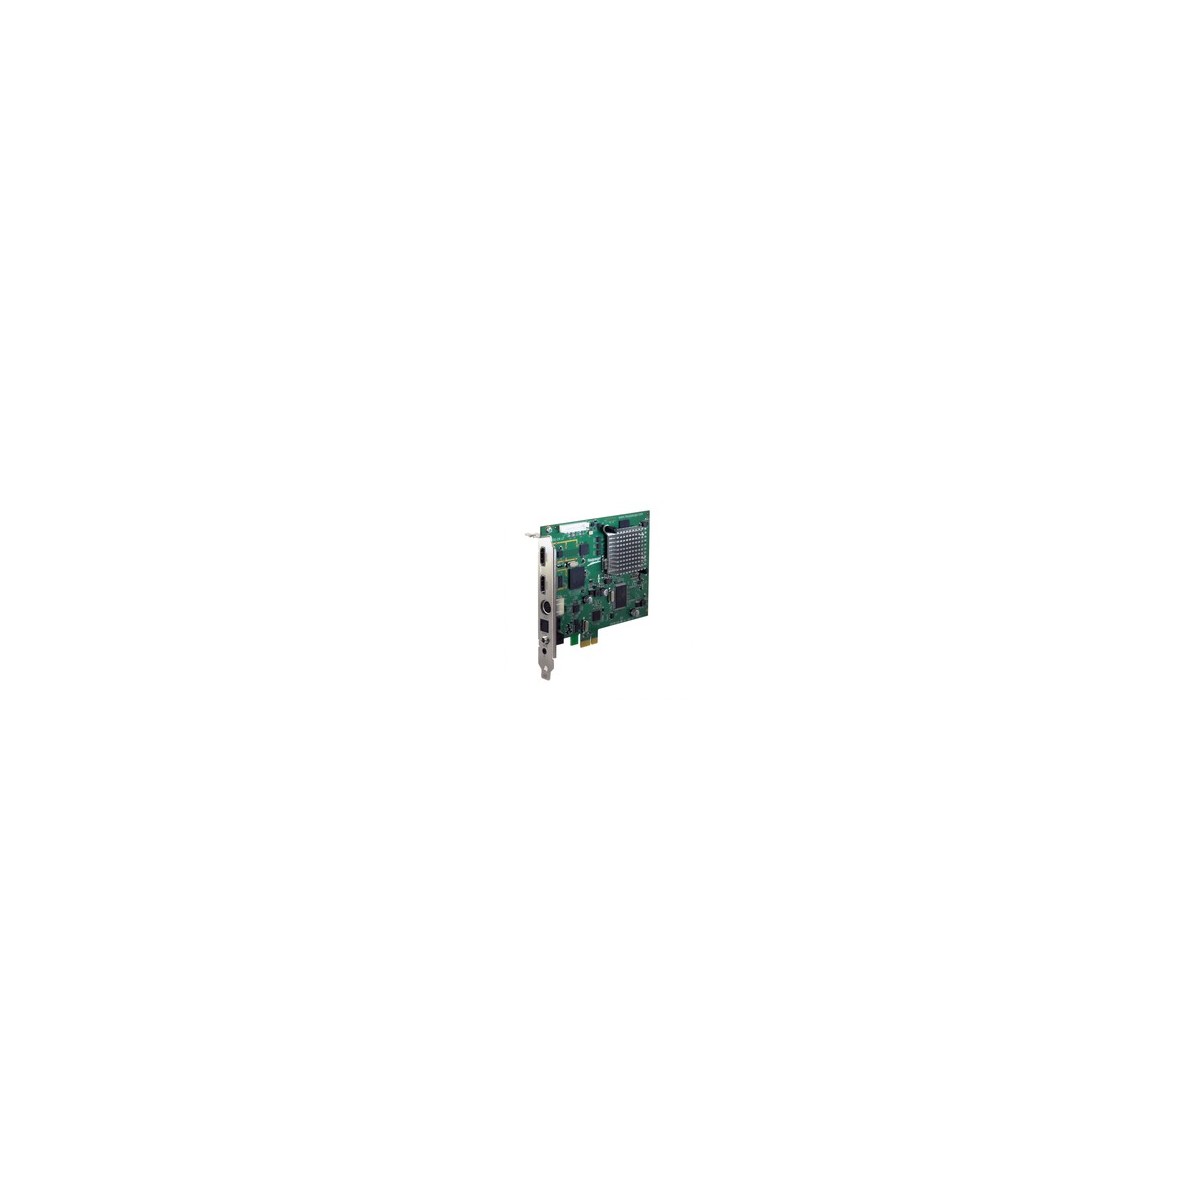 Hauppauge Colossus 2 - PCIe - Cable TV - PC - NTSC - PAL - 50 fps - 60 fps - 480i - 480p - 576i - 576p - 720p - 1080i - 1080p